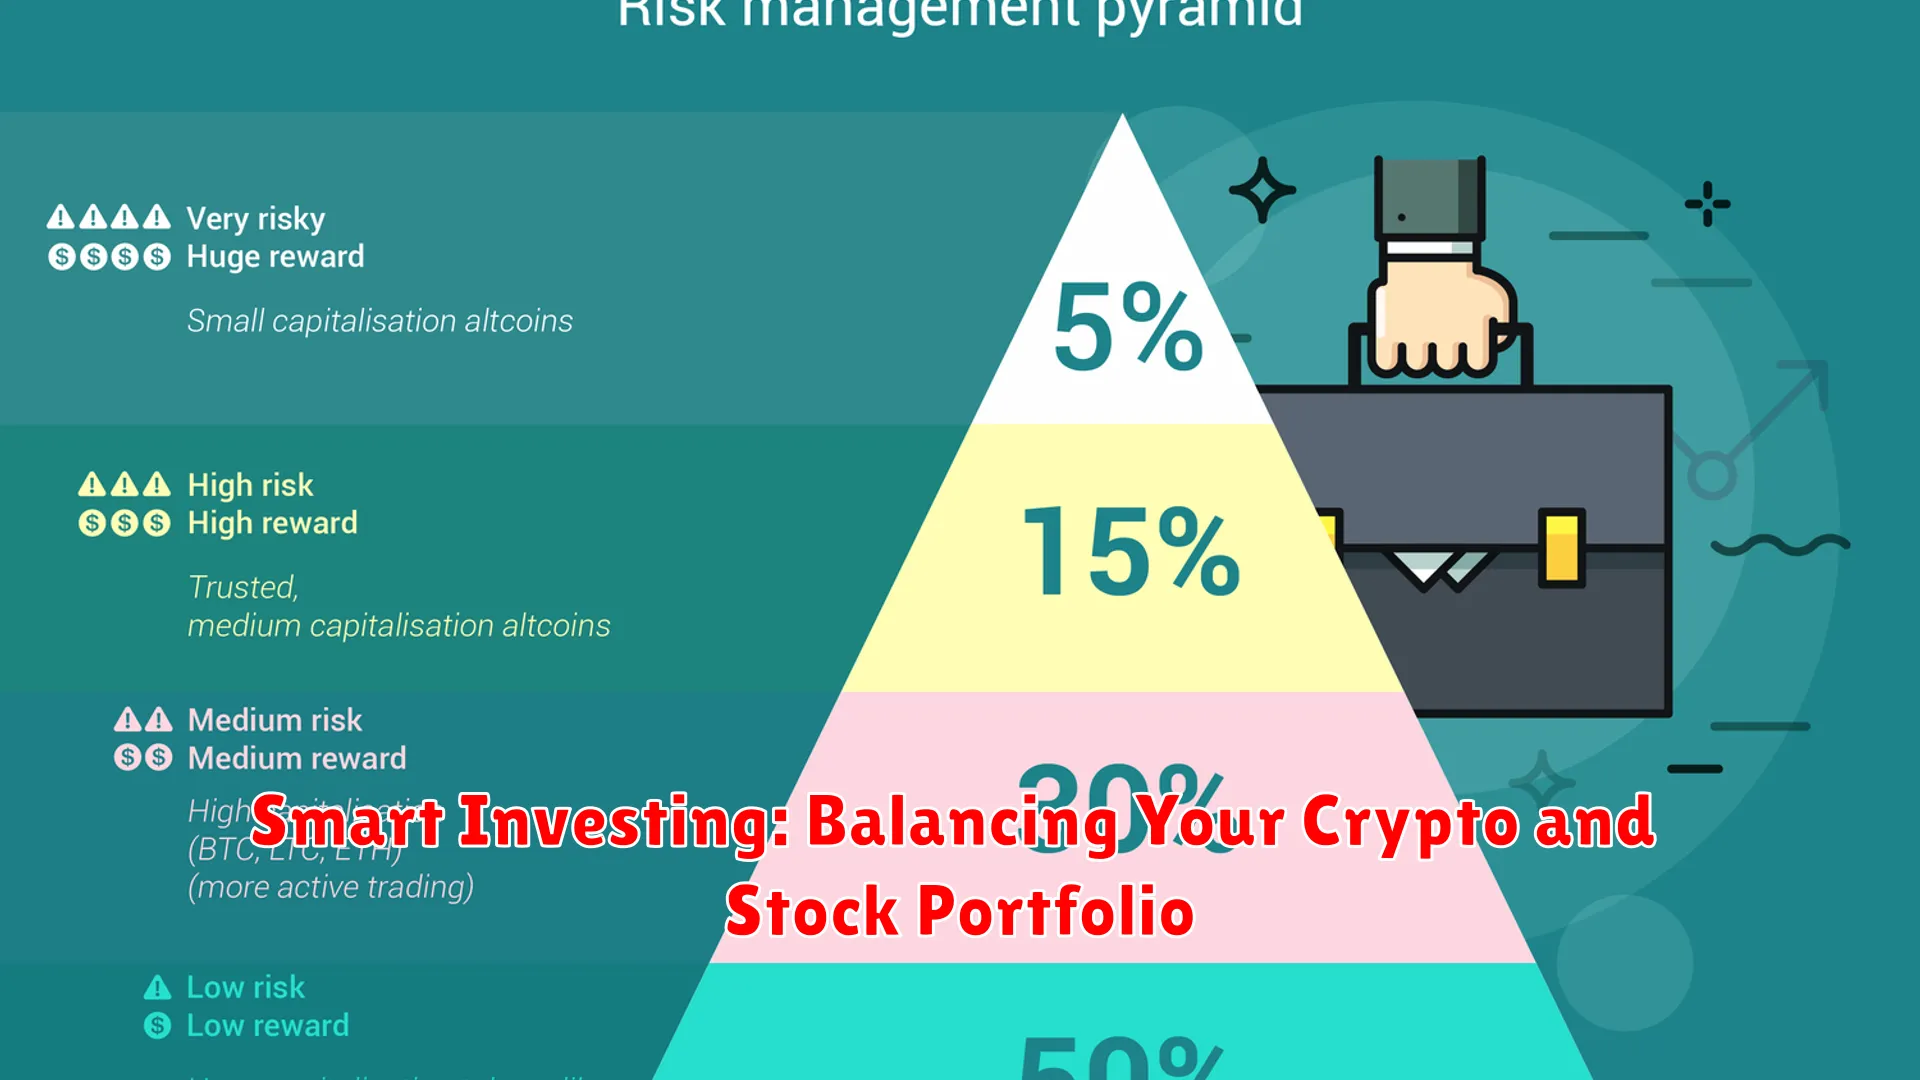 Smart Investing: Balancing Your Crypto and Stock Portfolio